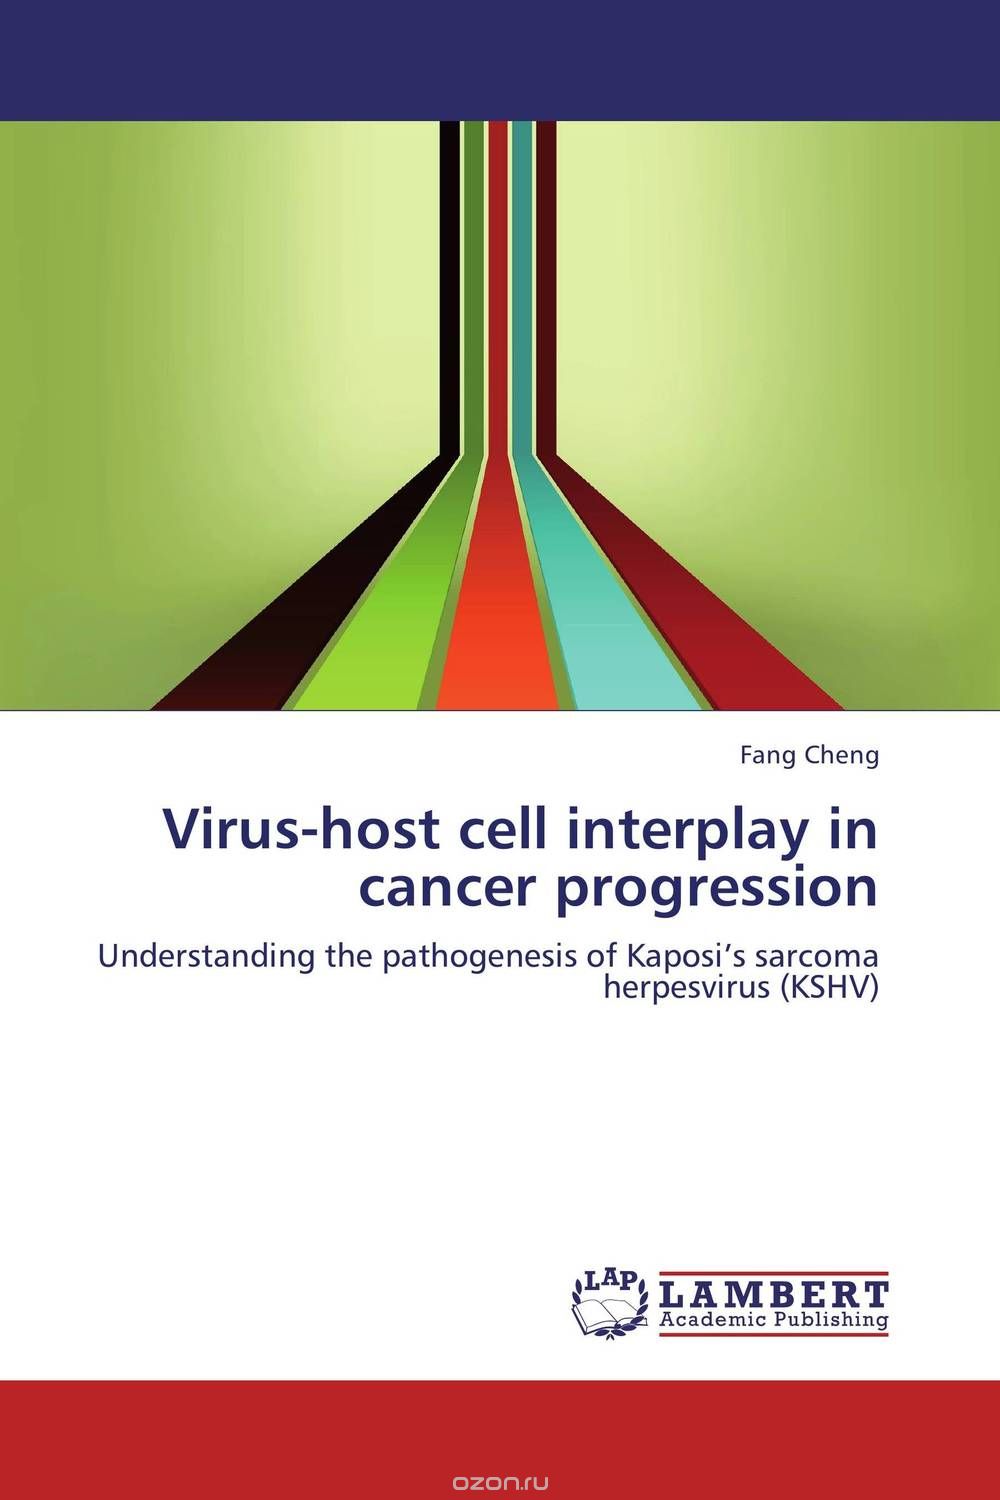 Скачать книгу "Virus-host cell interplay in cancer progression"